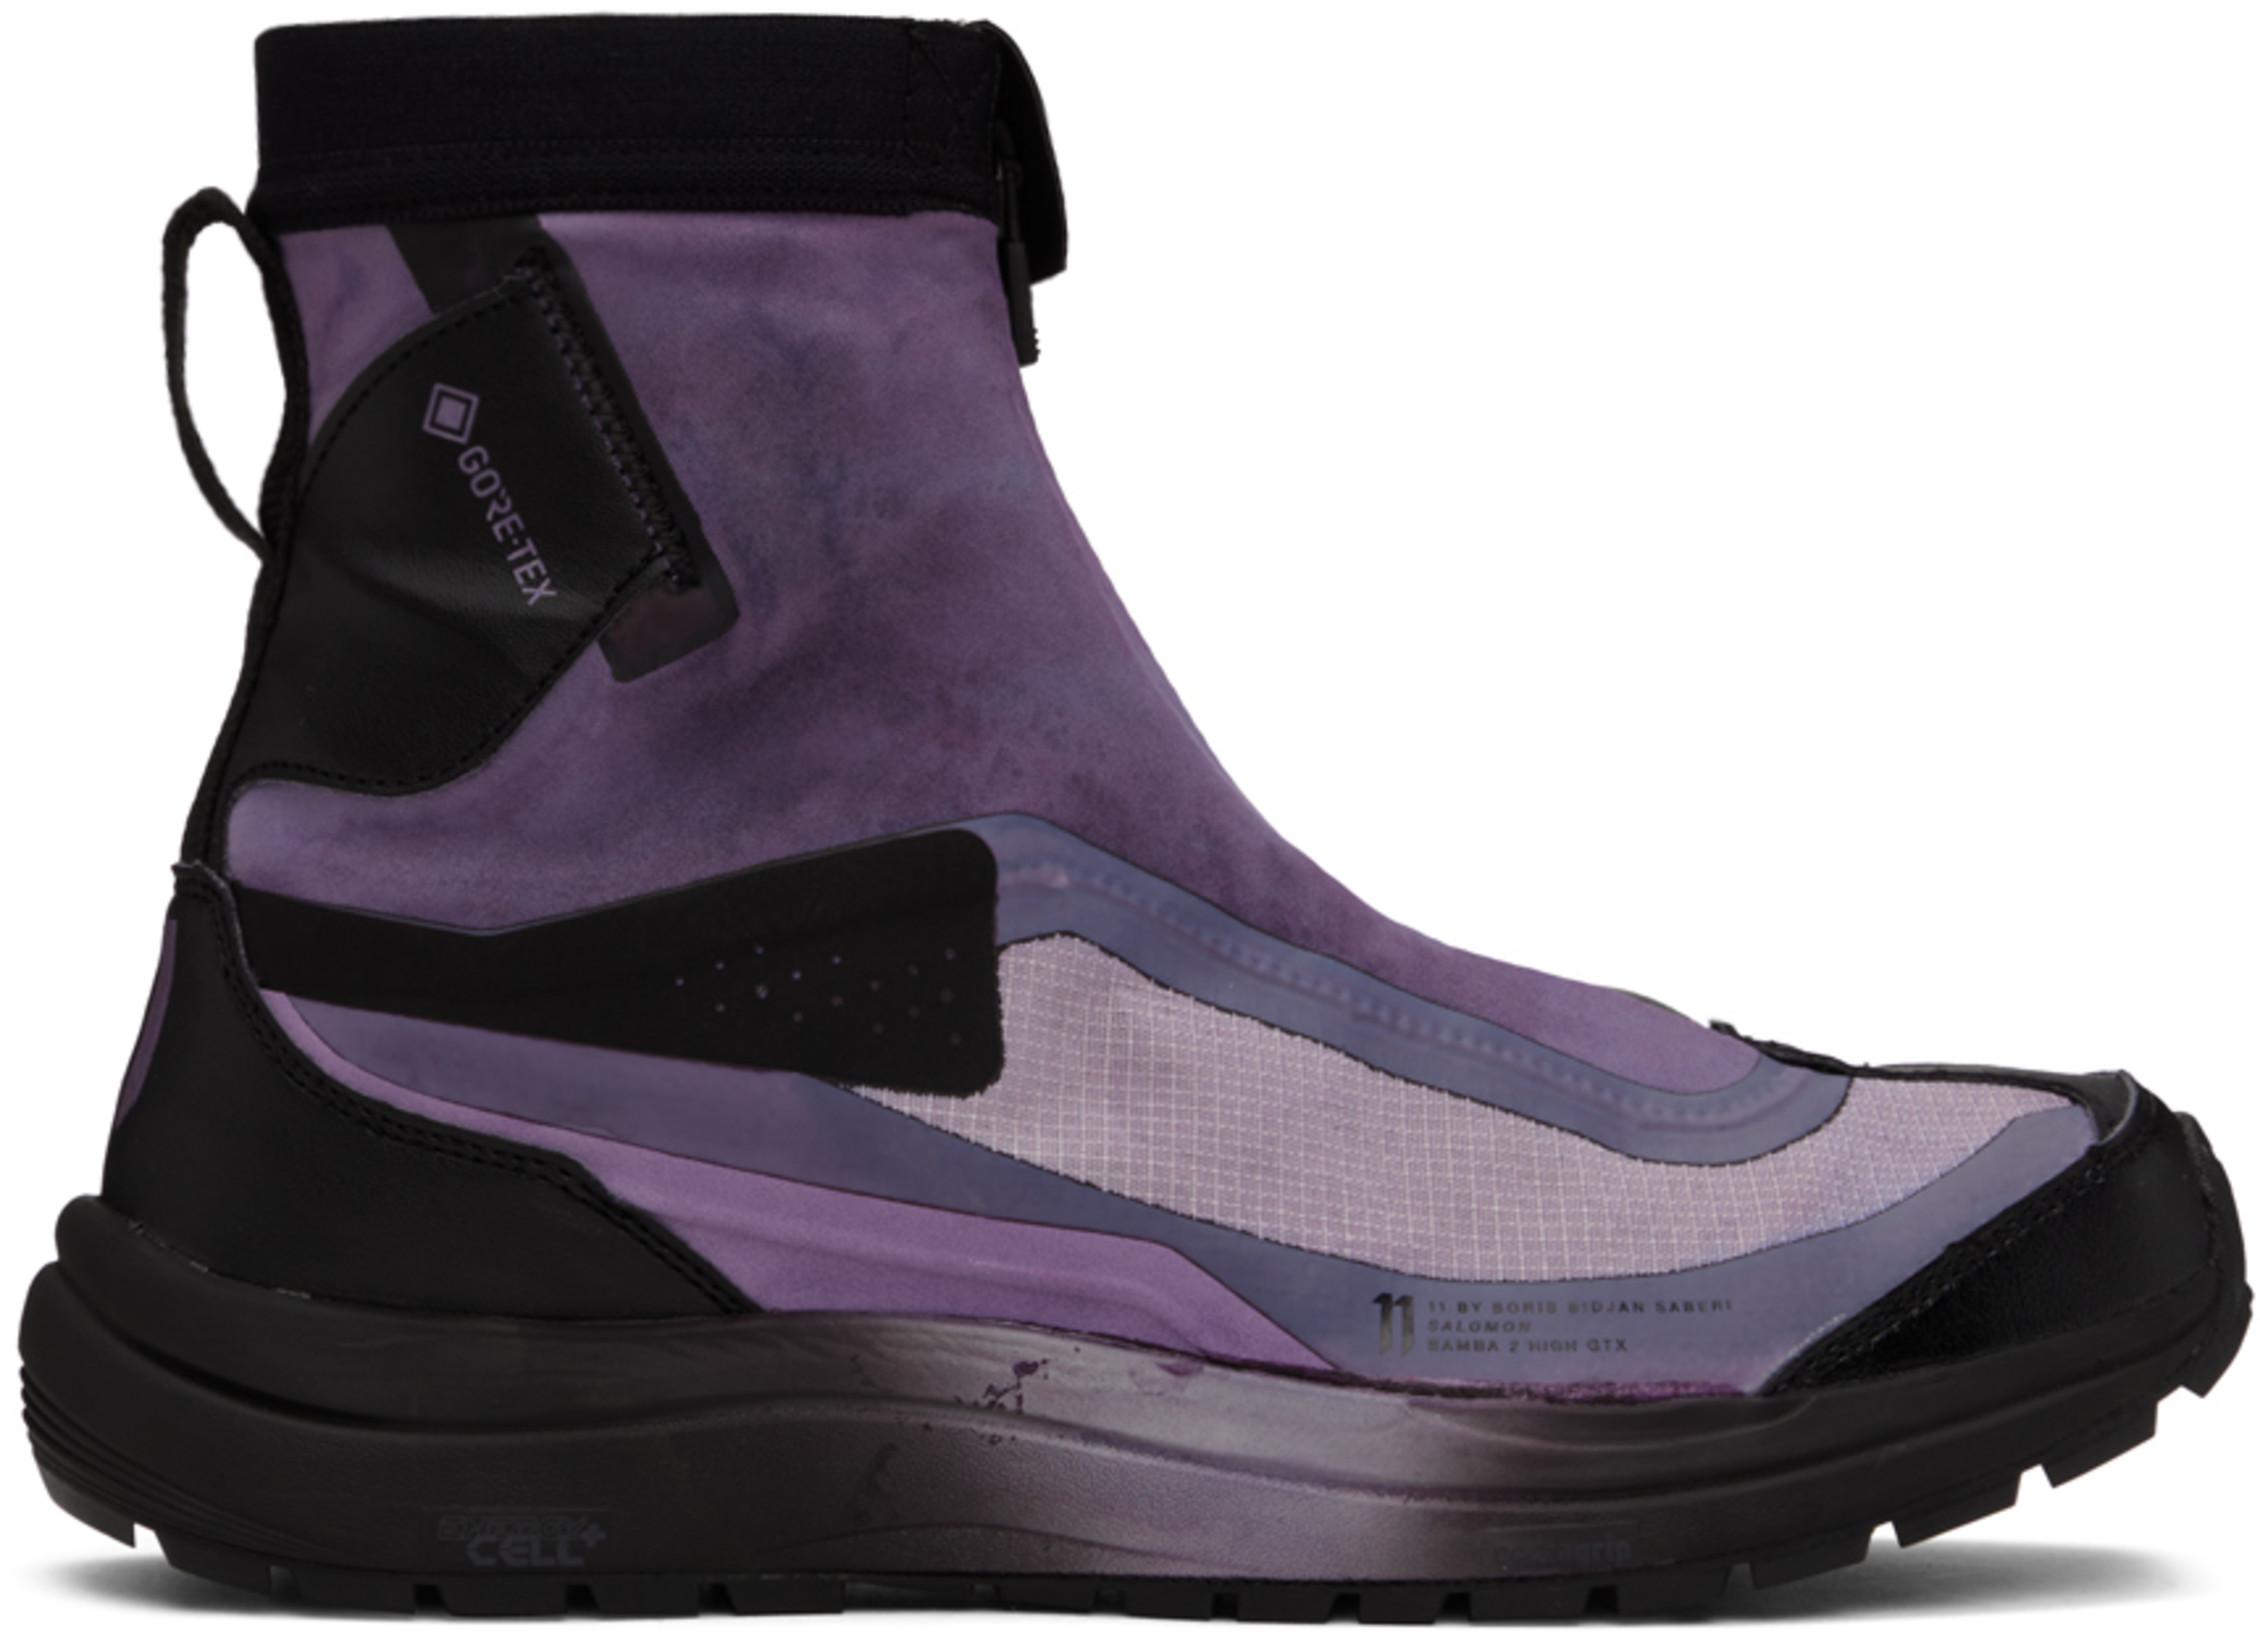 Purple Bamba 2 GTX Sneakers by 11 BY BORIS BIDJAN SABERI